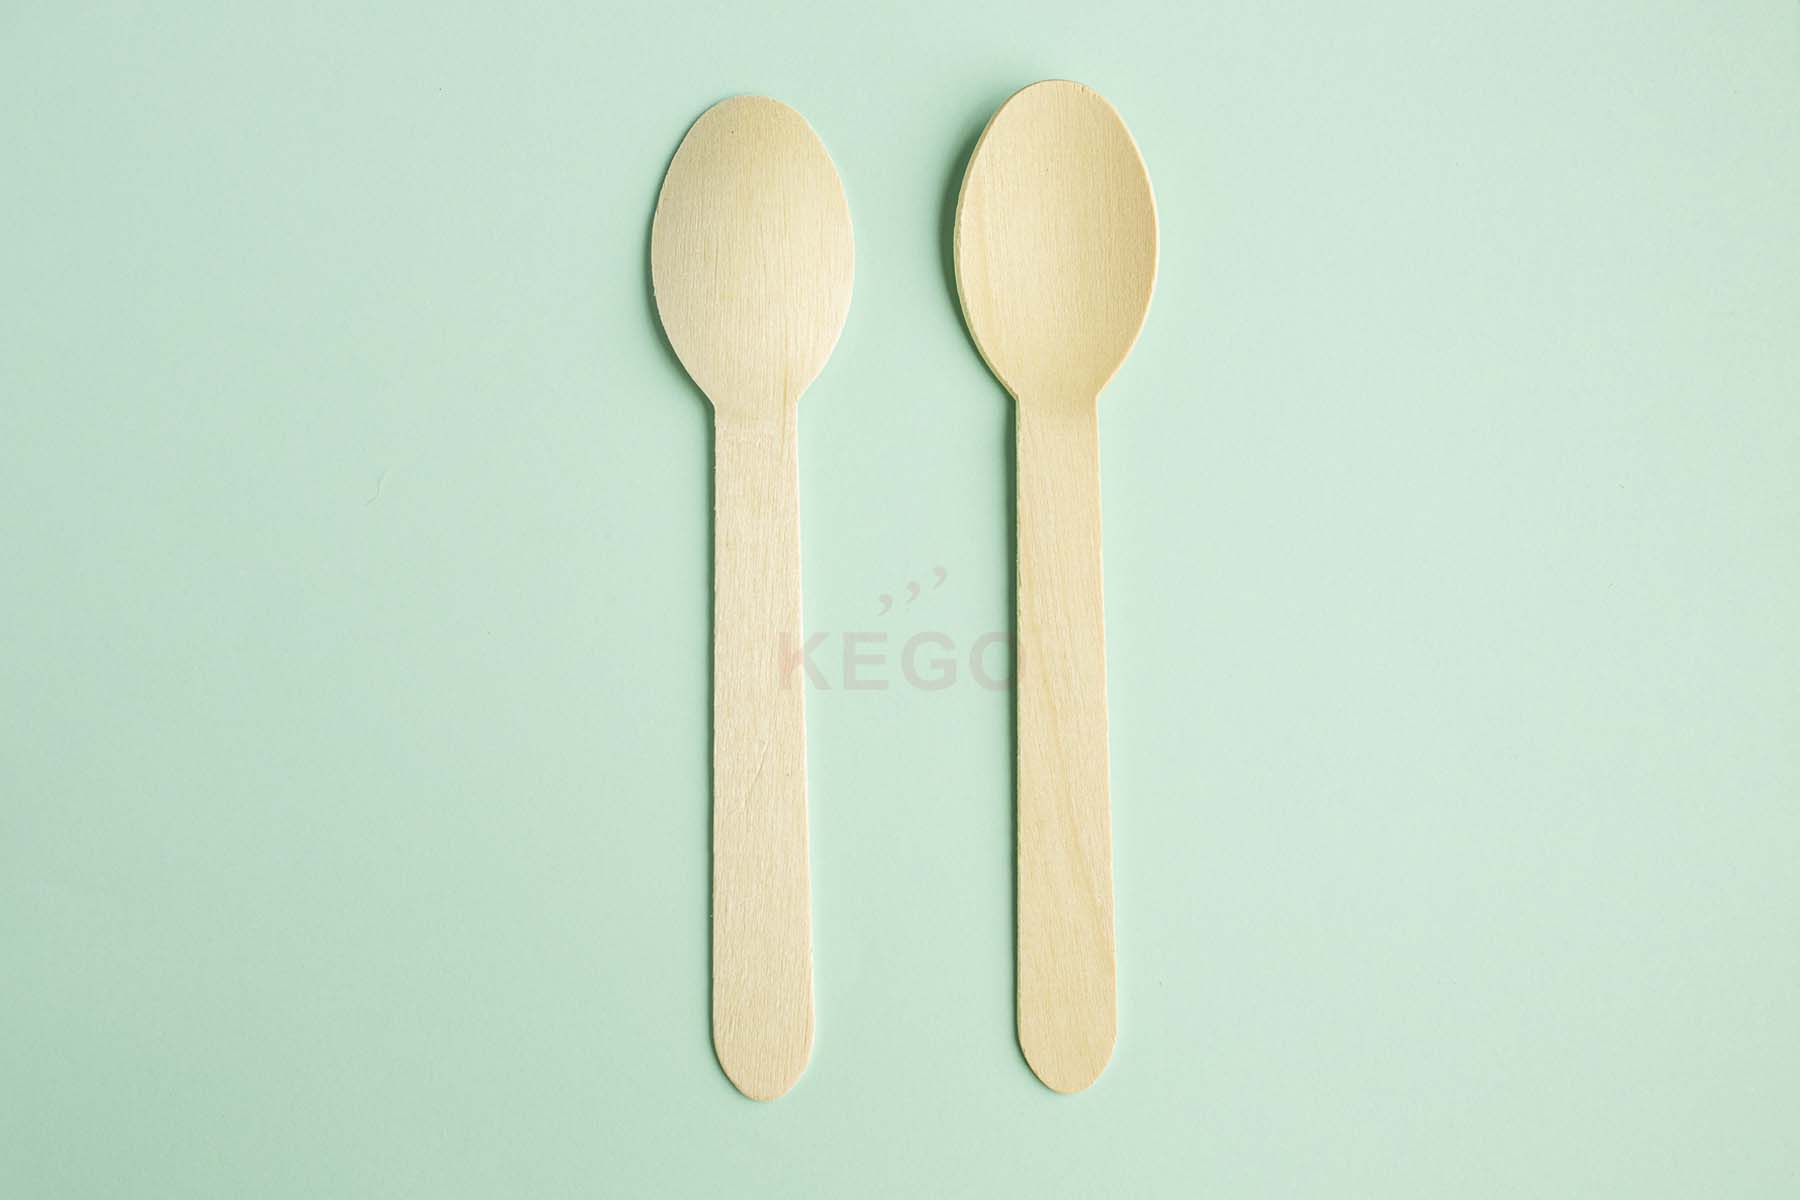 https://kego.com.vn/wp-content/uploads/2015/09/disposable-wooden-spoon-4.jpg